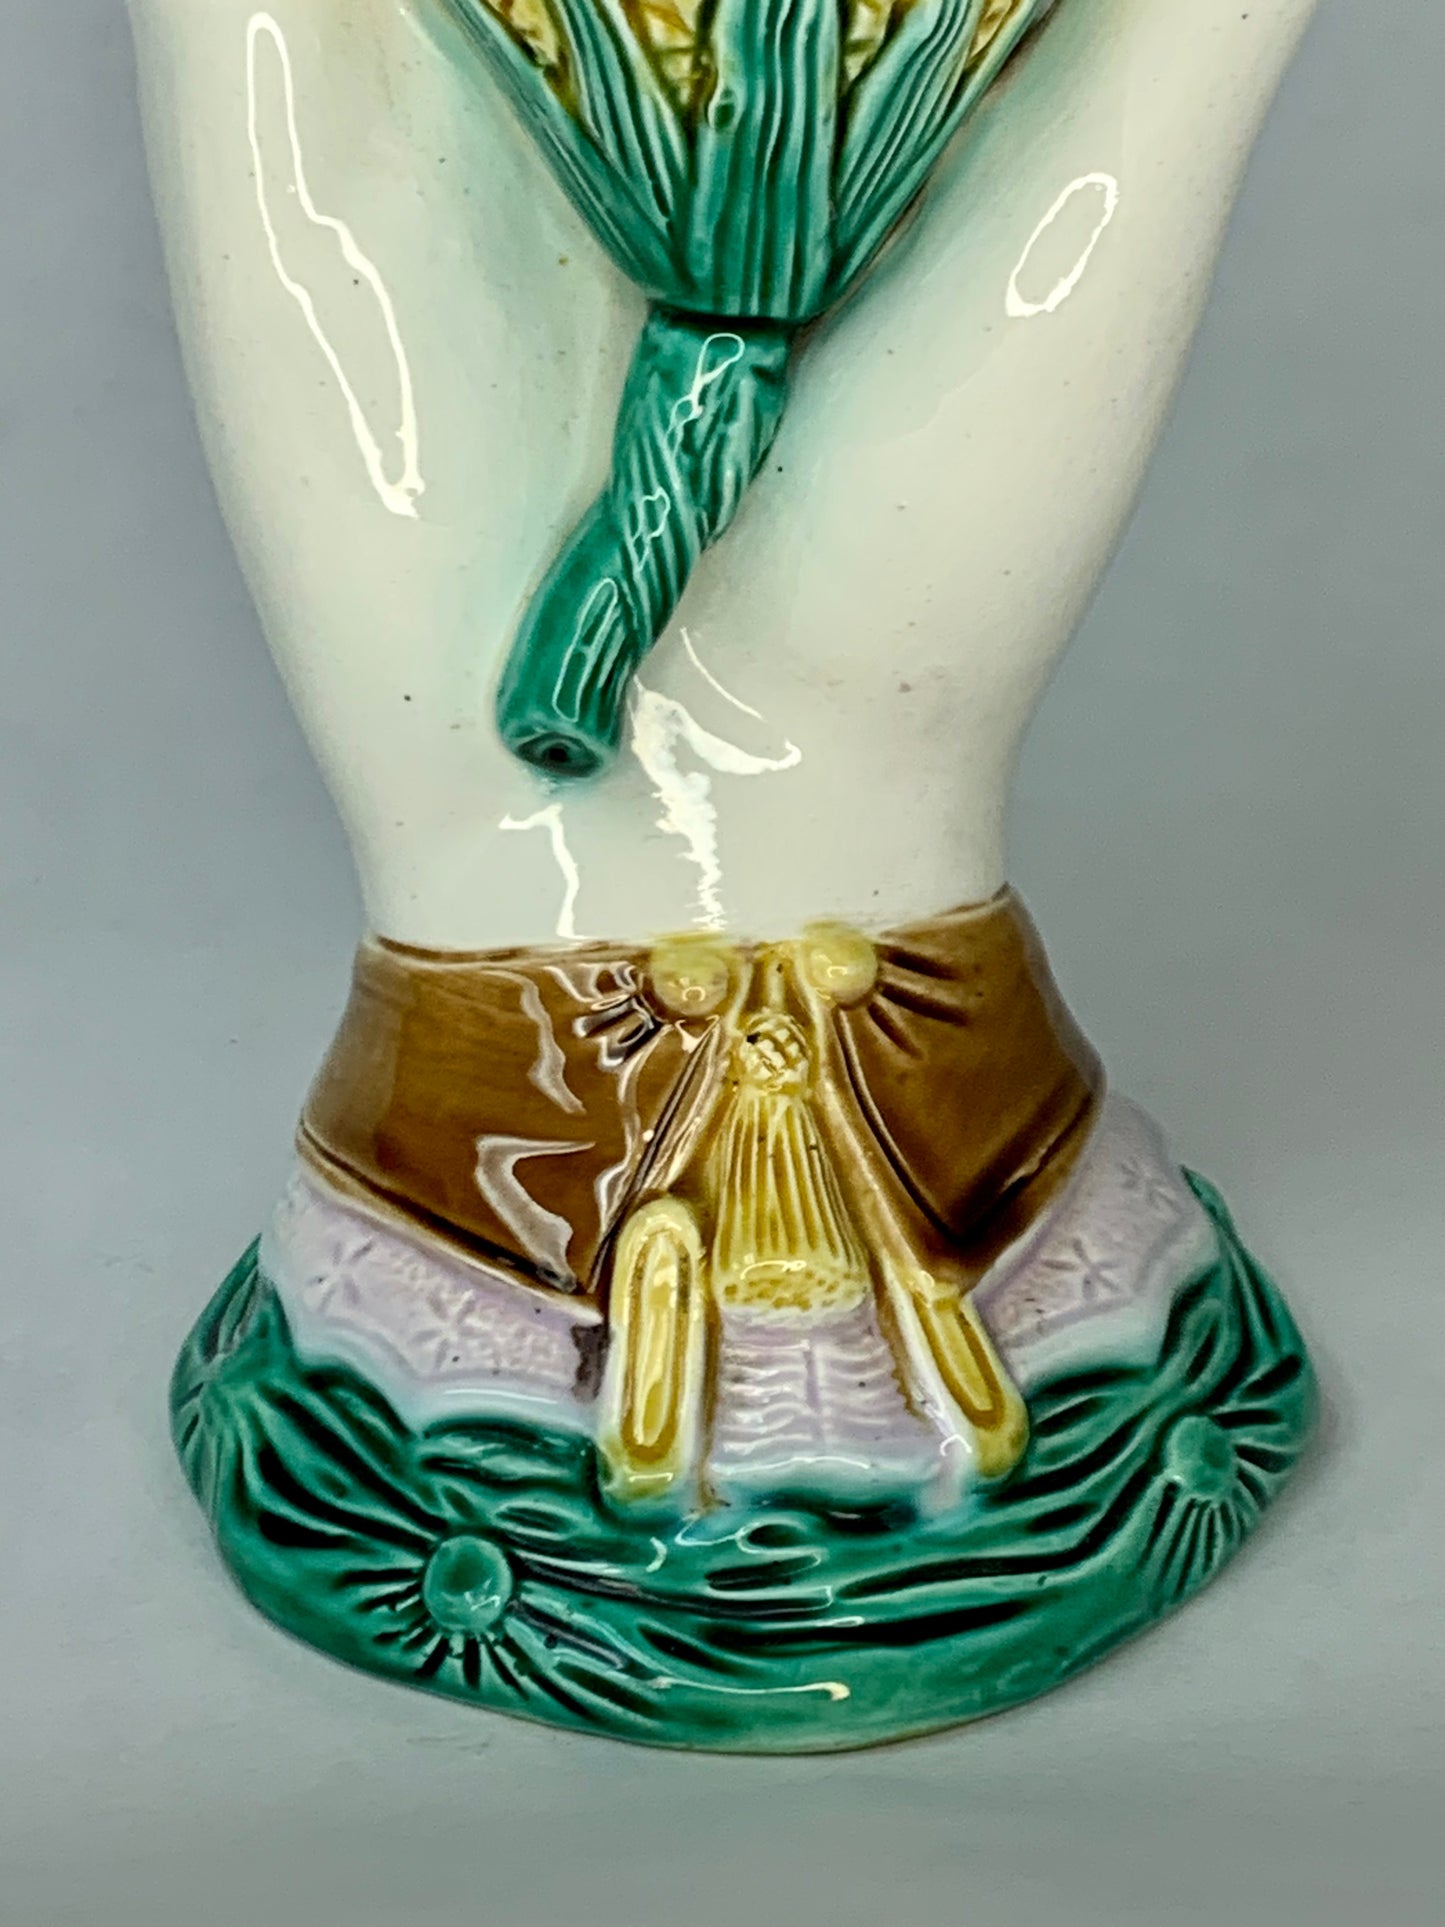 Pineapple Hand Vase